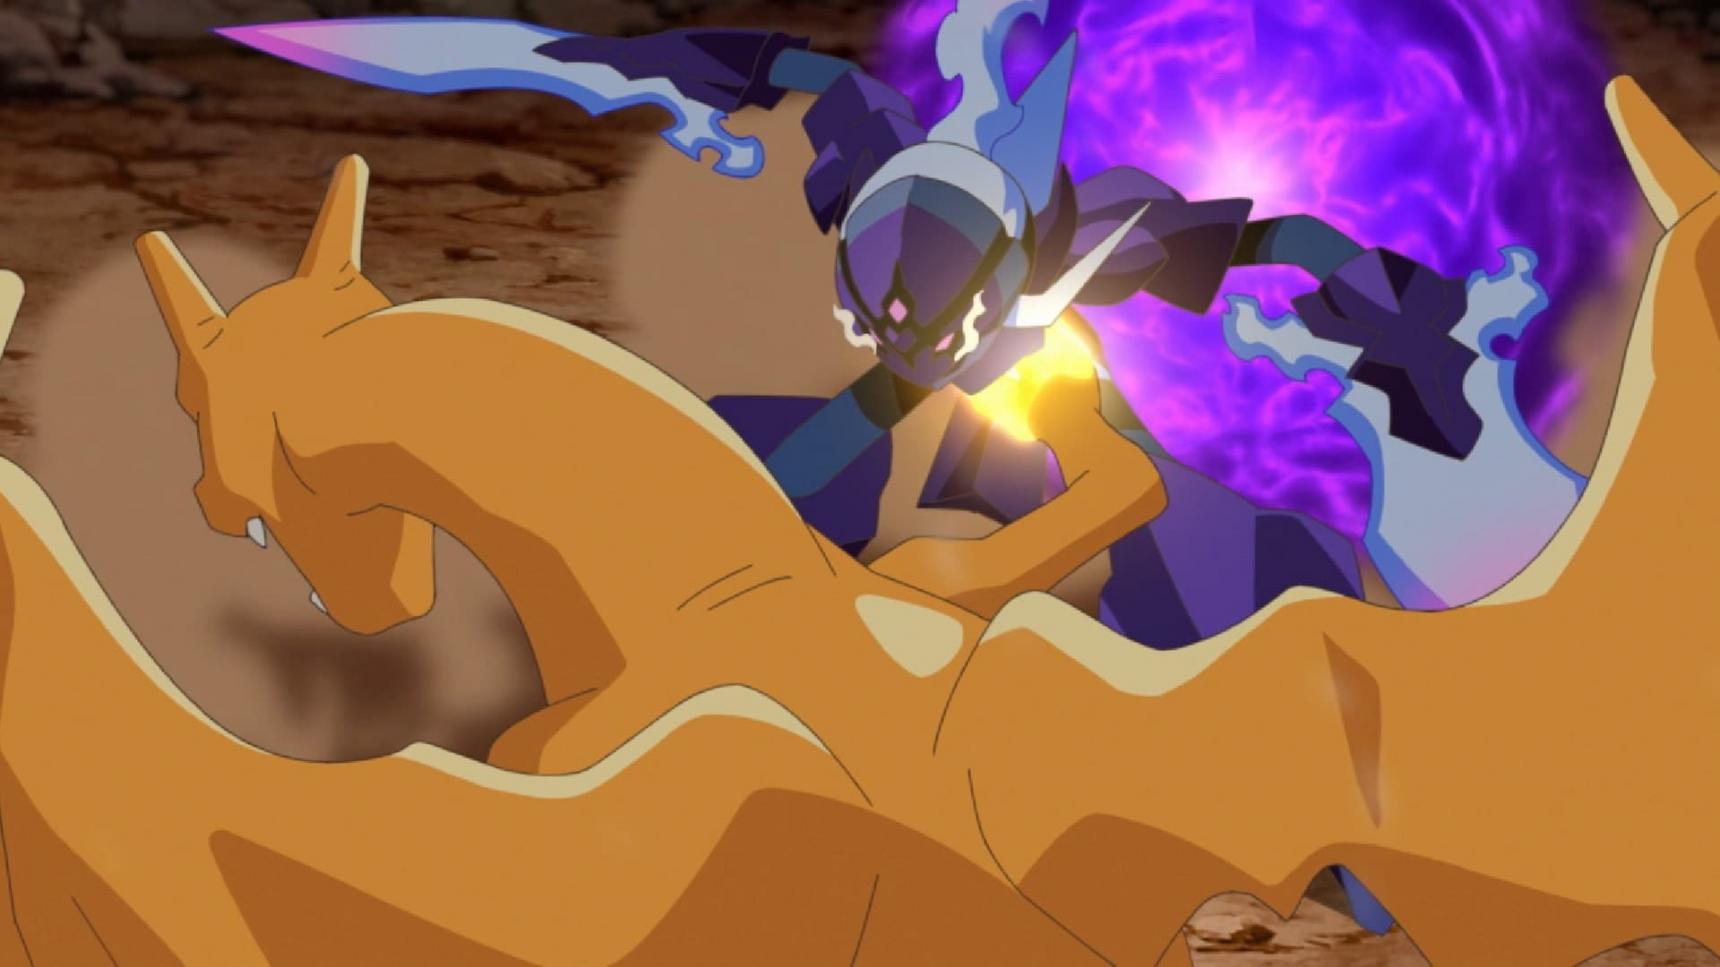 Poster del episodio 22 de Horizontes Pokémon online